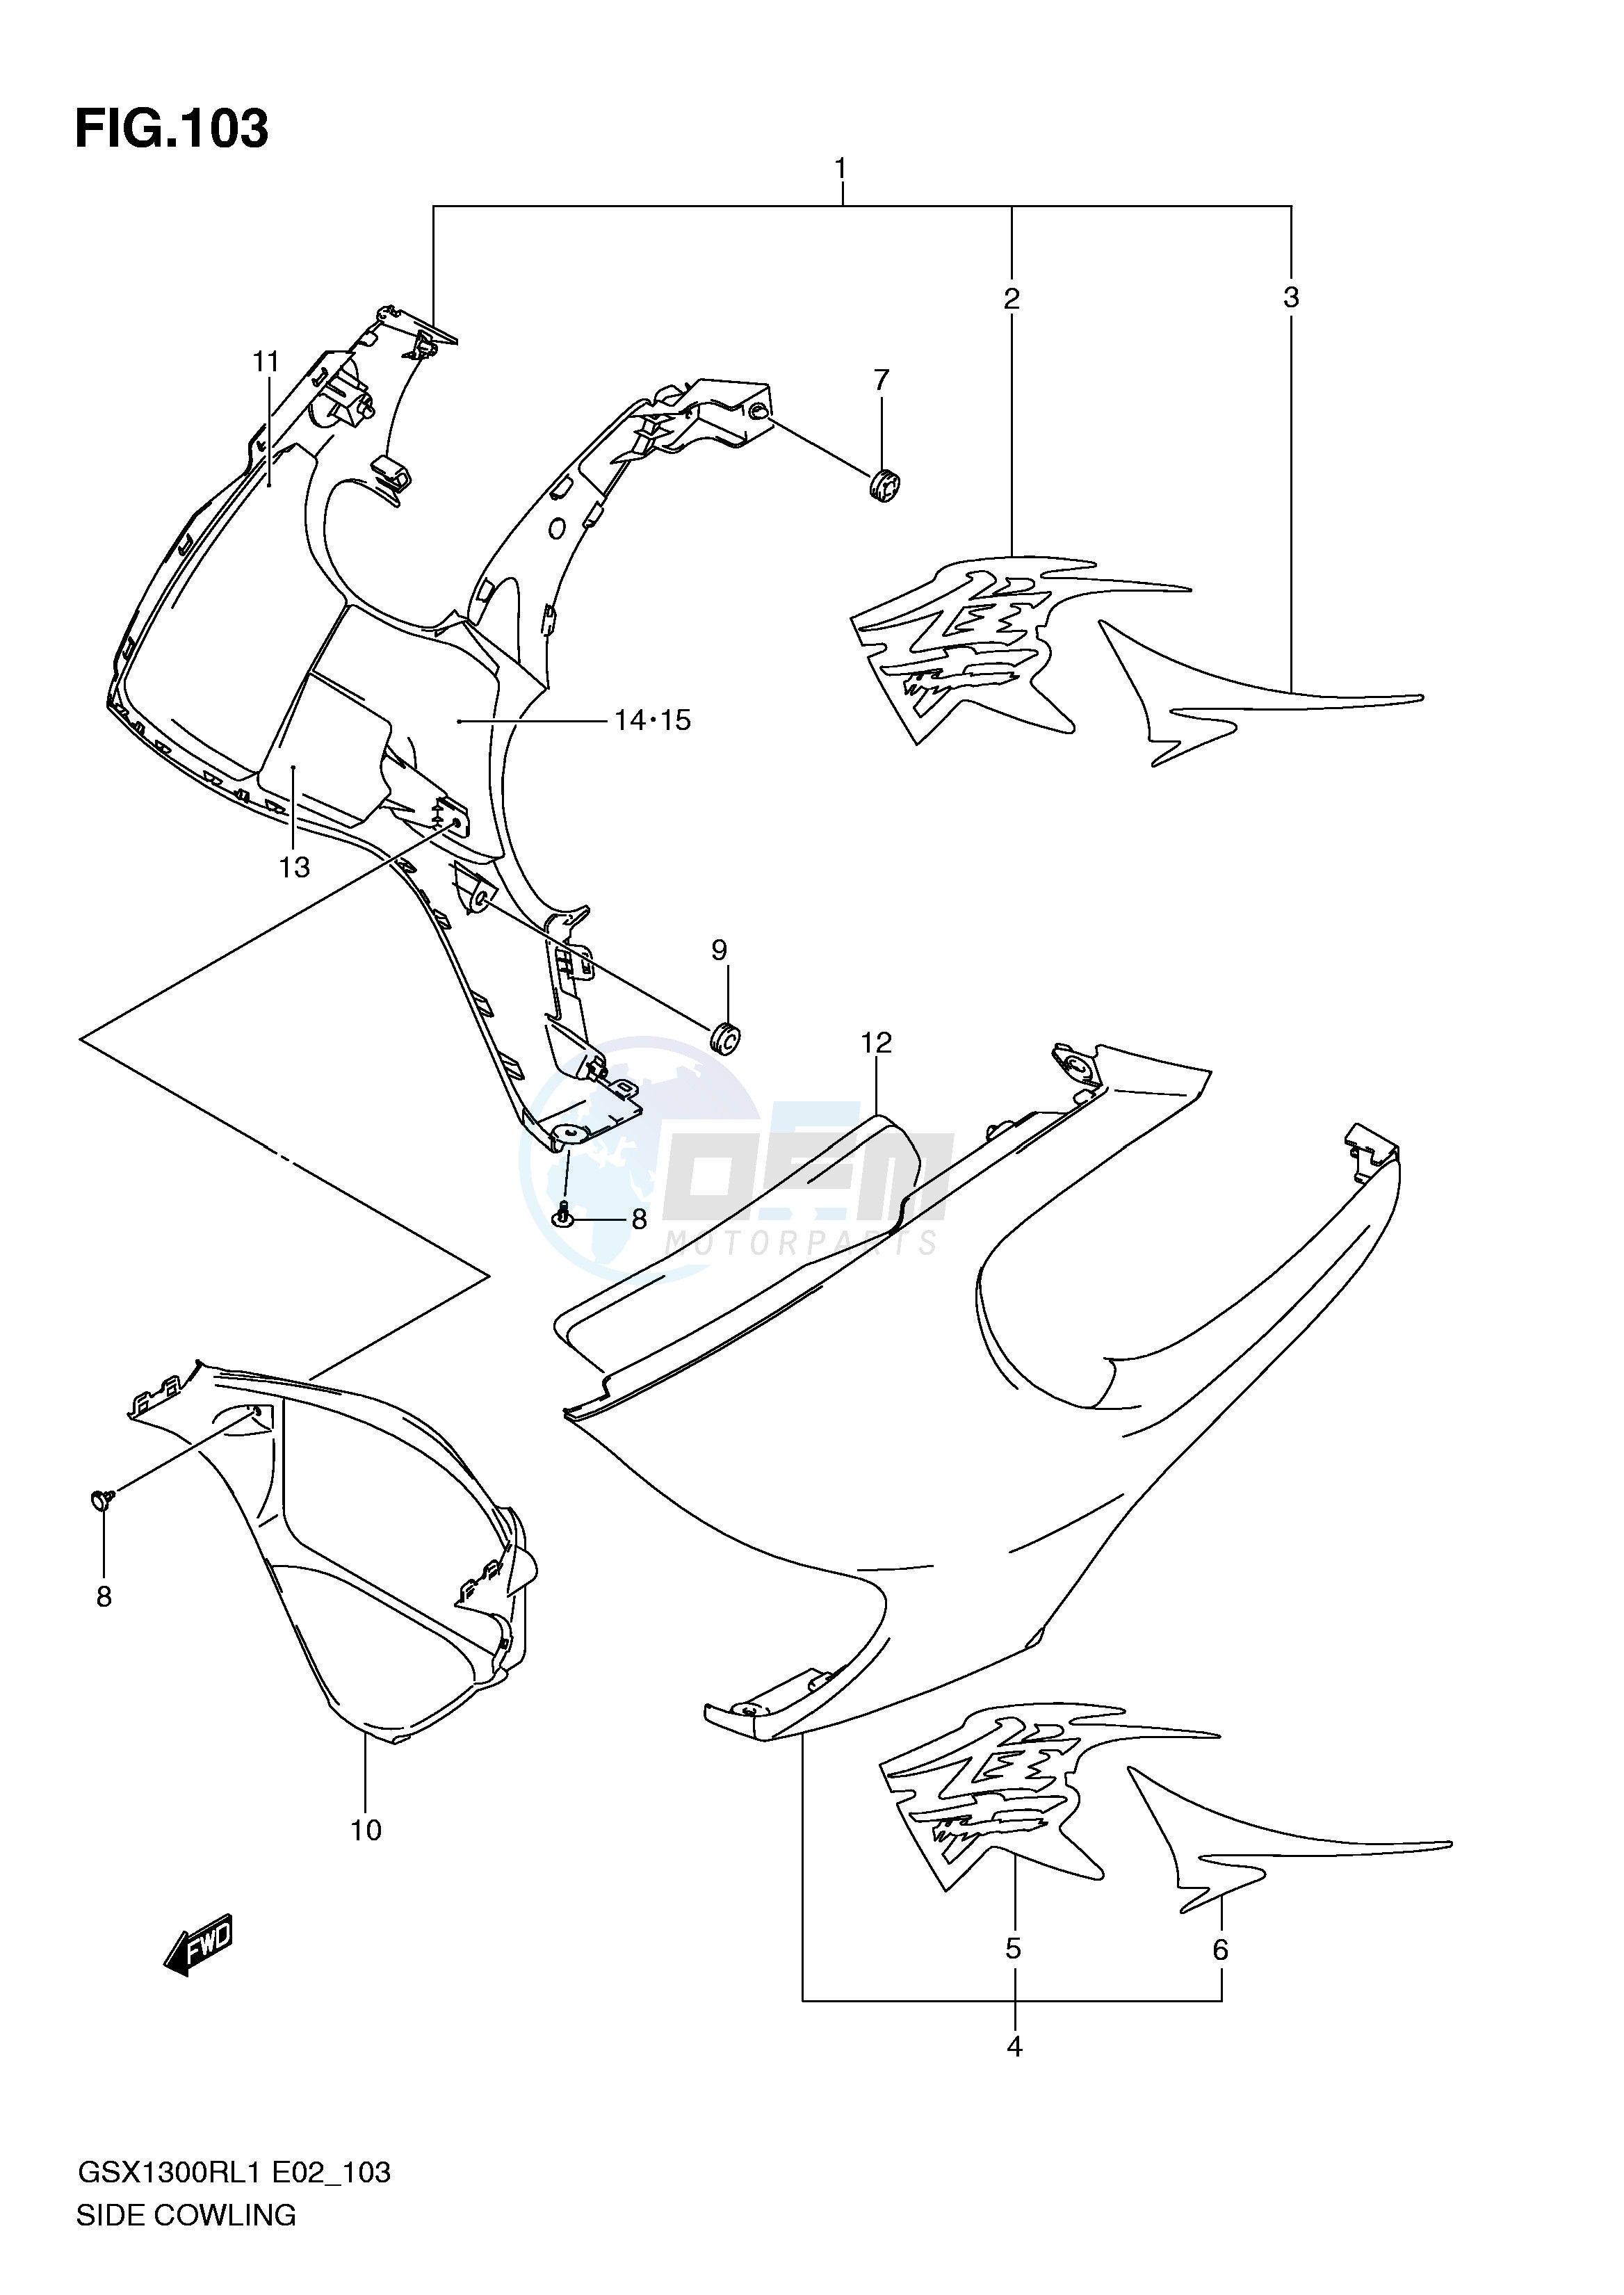 SIDE COWLING (GSX1300RL1 E51) blueprint